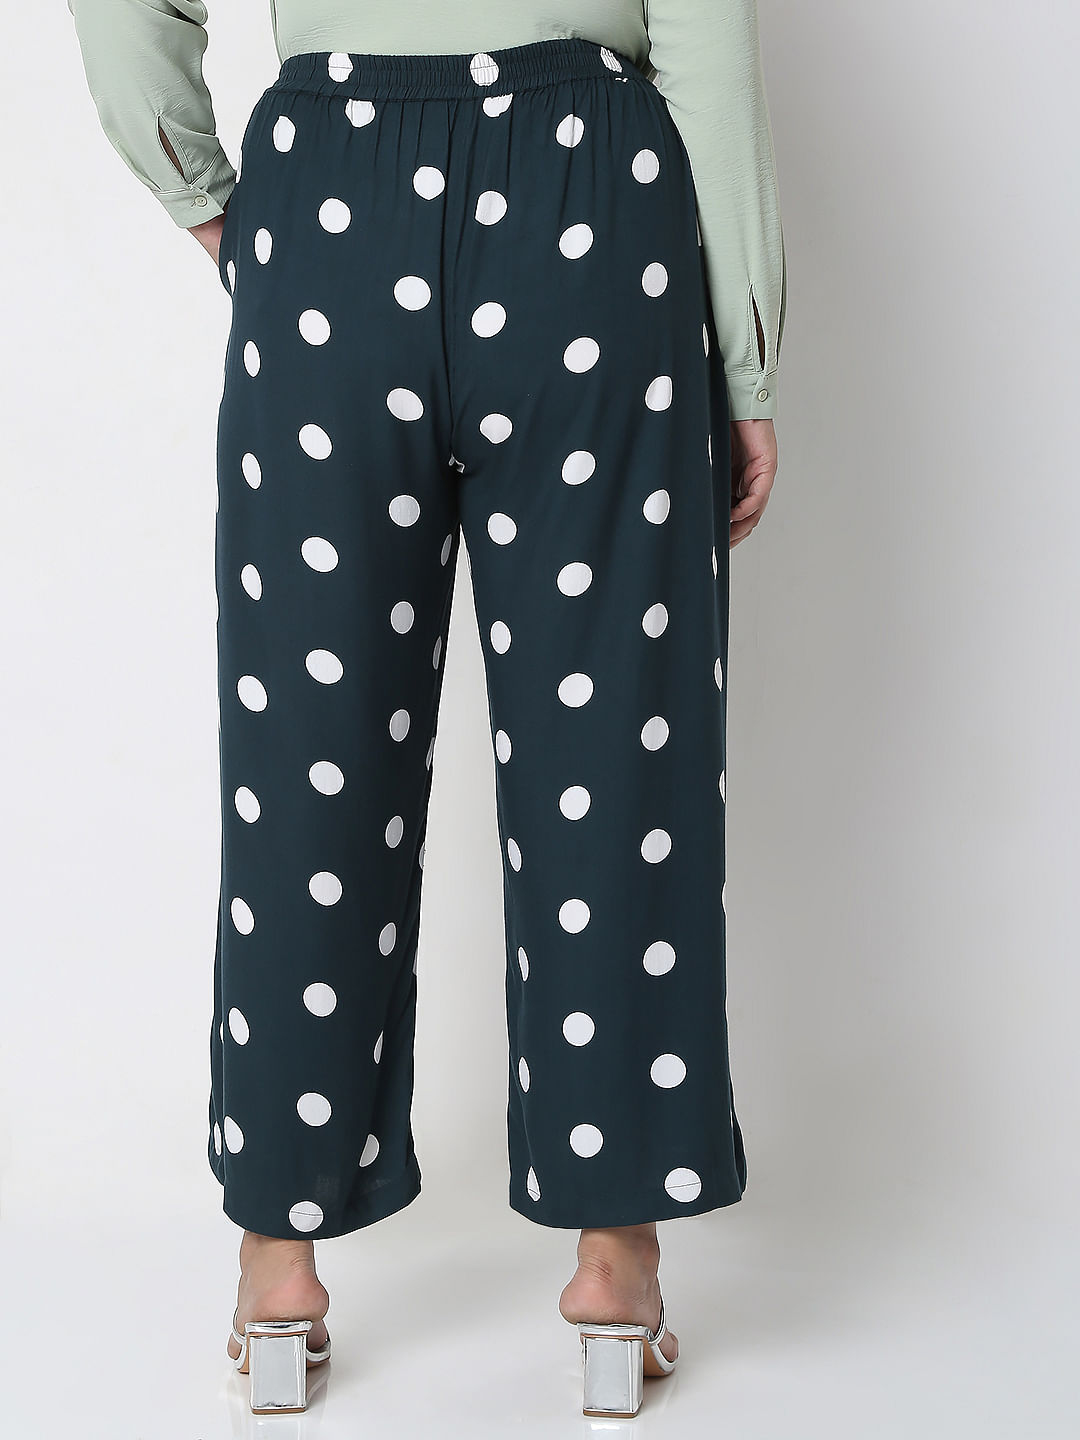 Polka Dot Pants for Girls | Cute Girls' Clothes – Hayden Girls